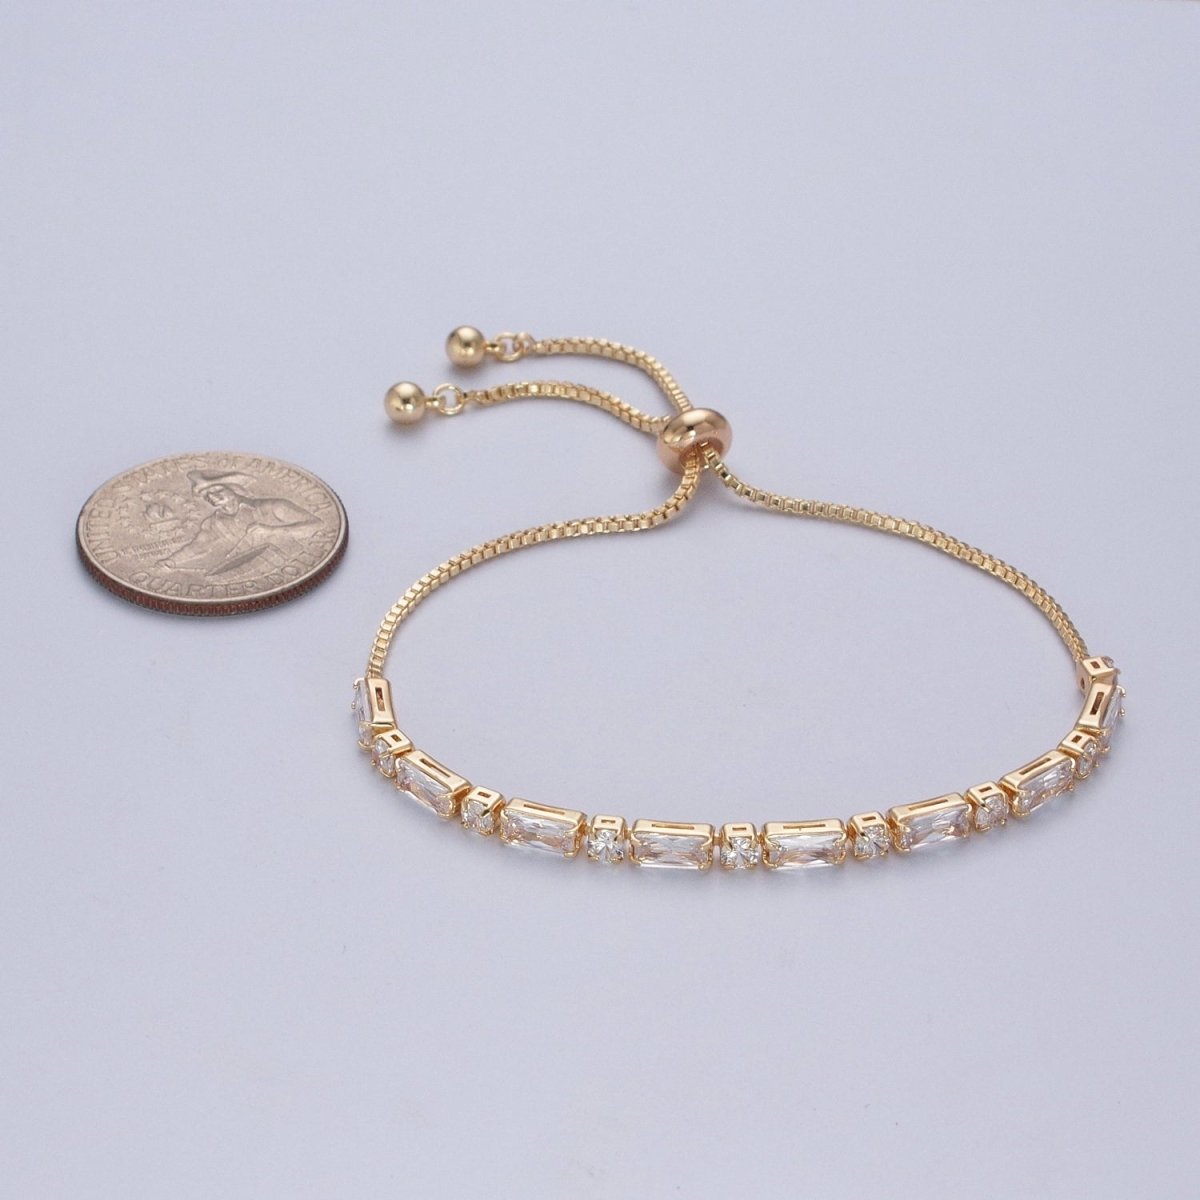 24K Gold Filled Clear Baguette Cubic Zirconia Adjustable Bracelet Chain | WA-1002 - DLUXCA